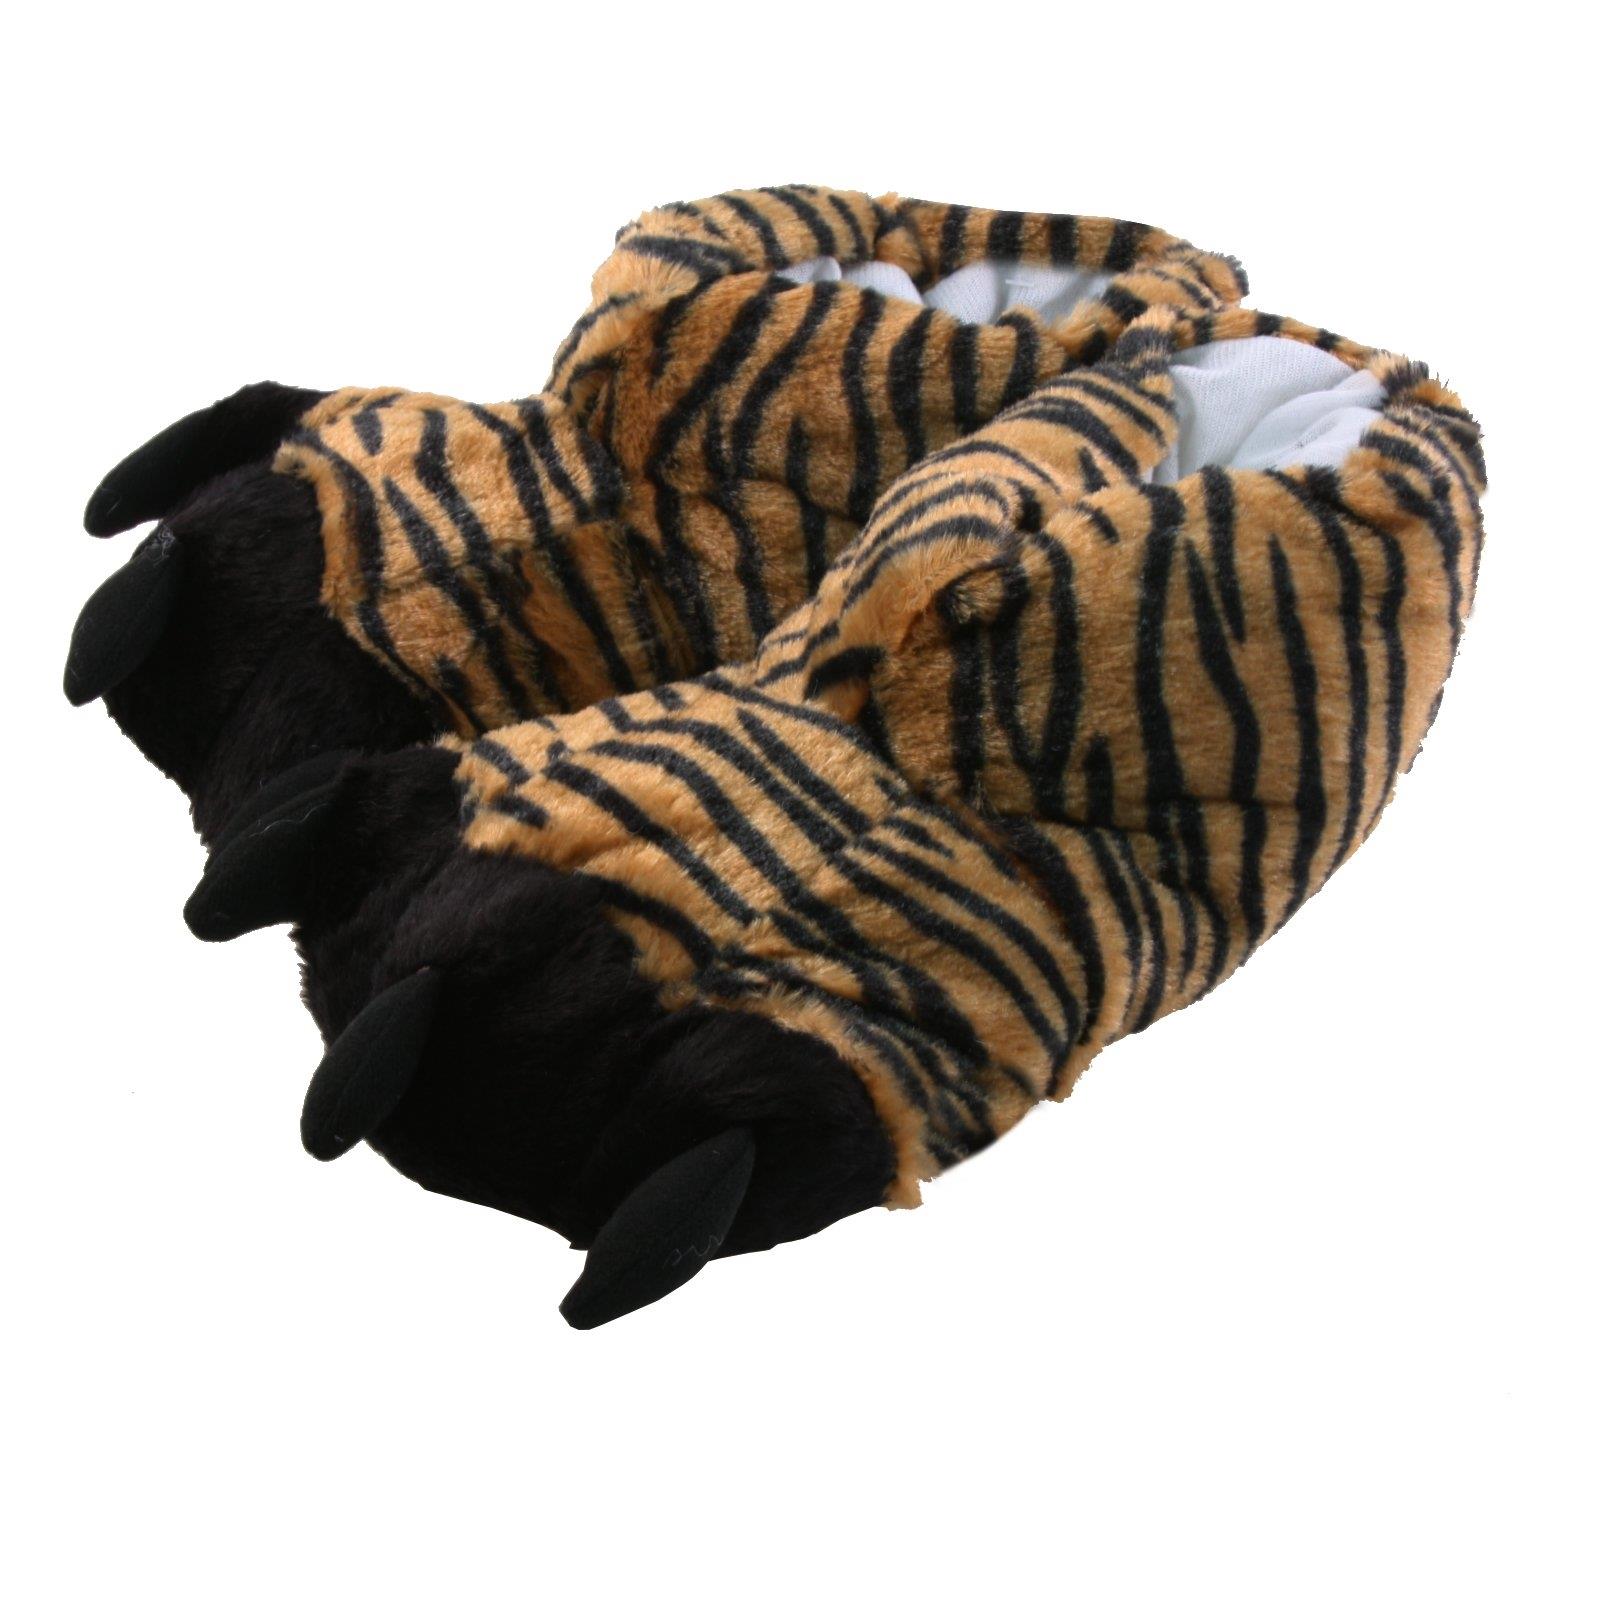 Tiger Patmol Animal Chaussons Pantoufle Chaussons Peluche griffes Chaussures Roar 41-46